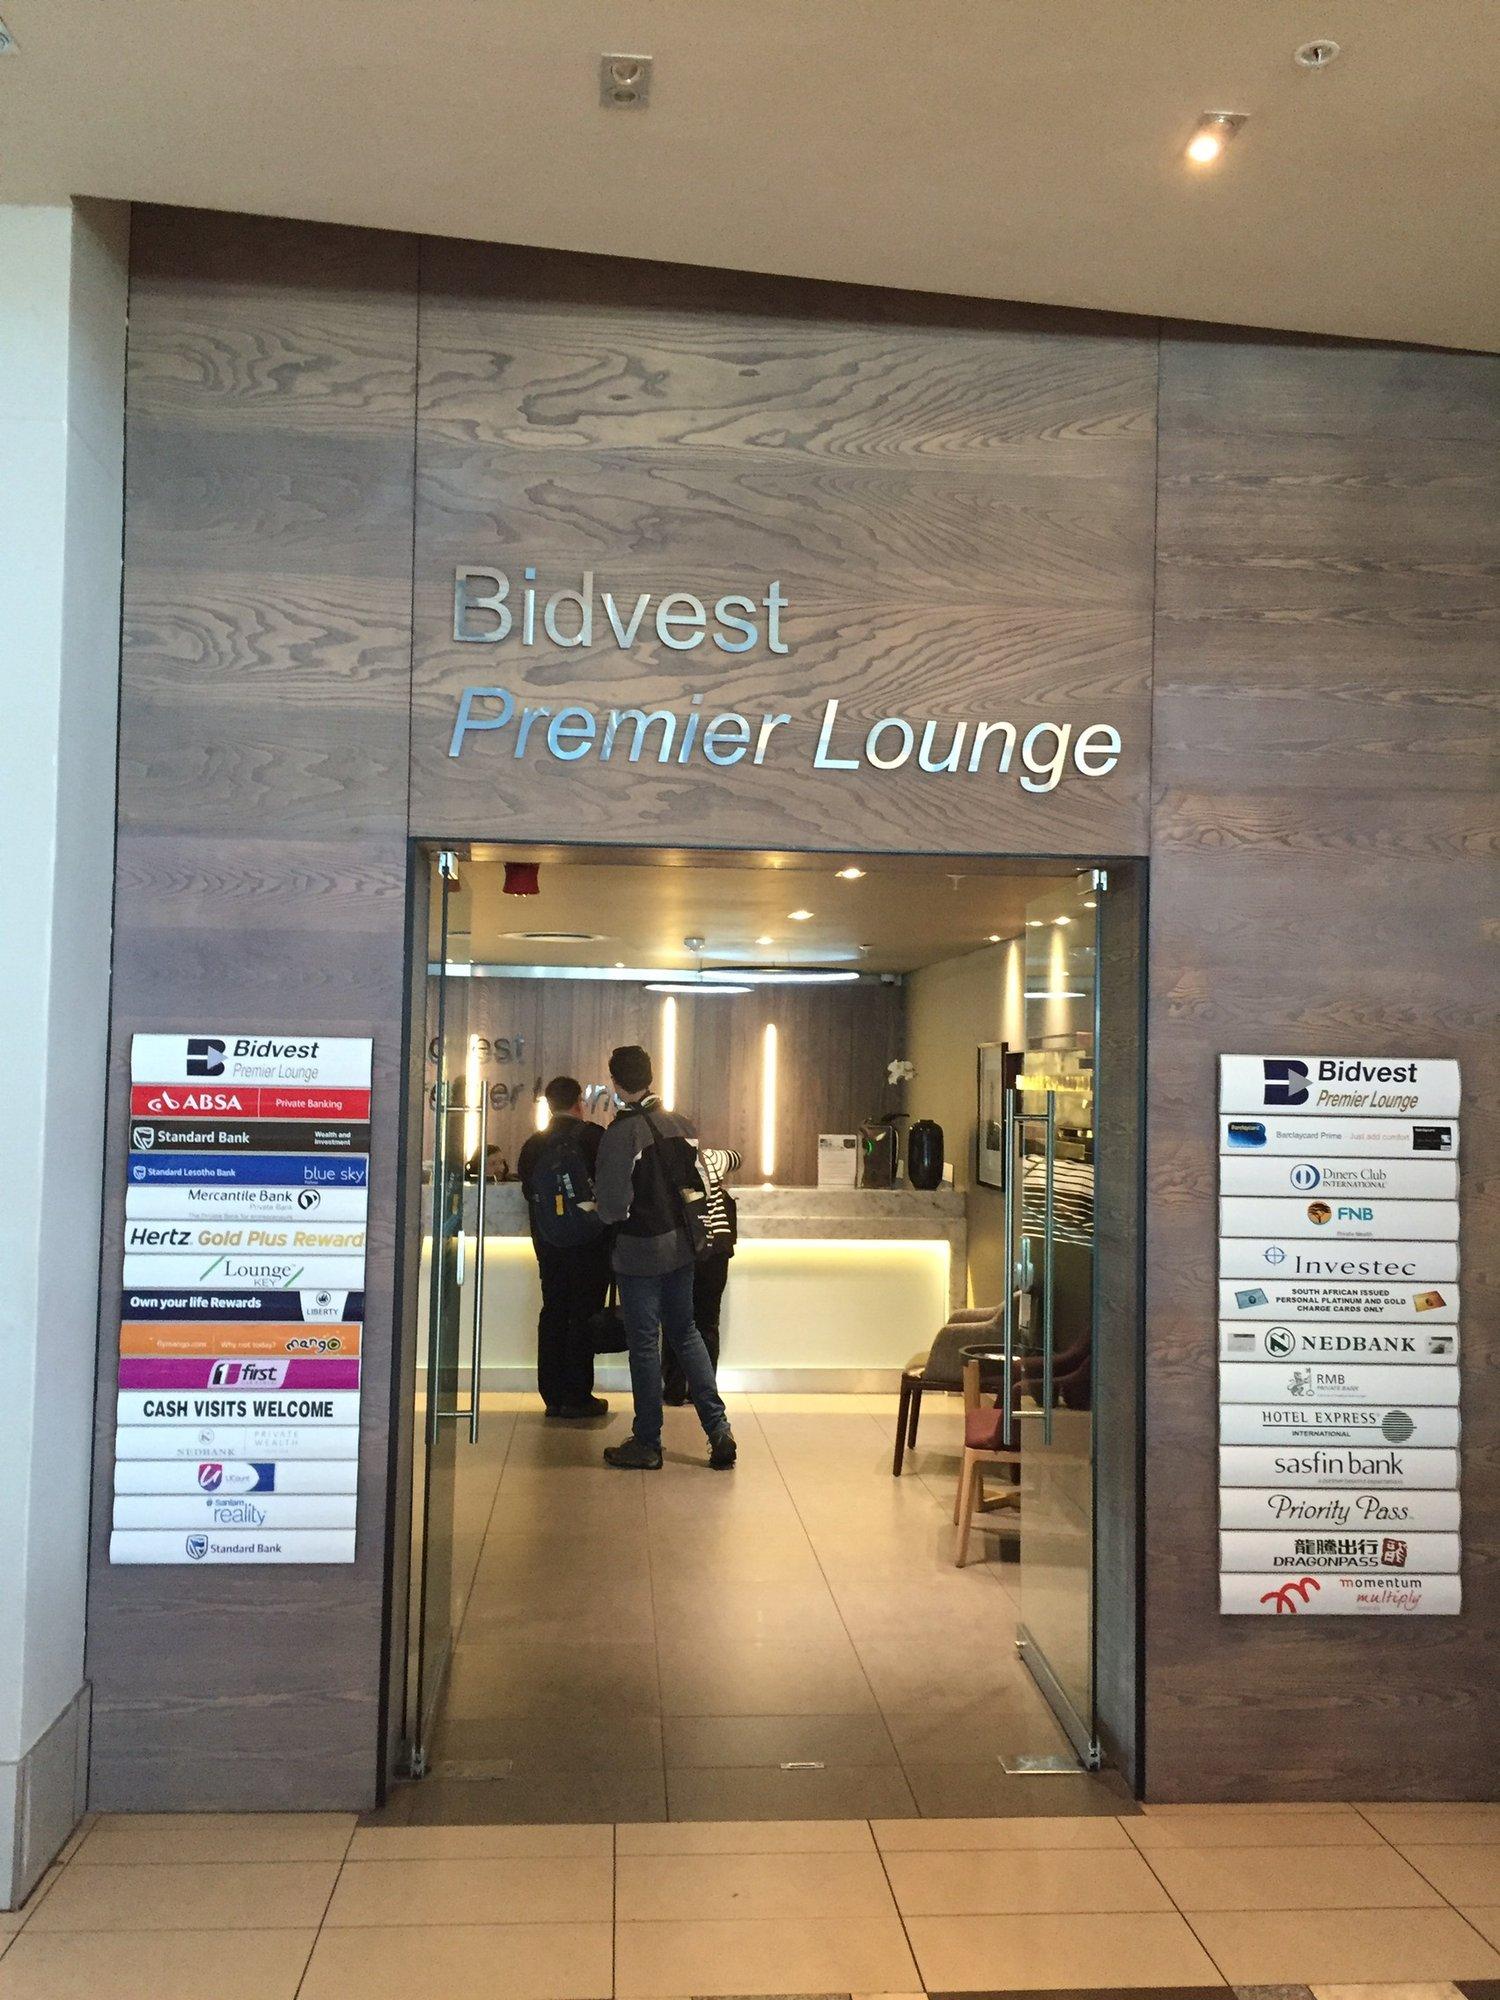 Bidvest Premier Lounge image 9 of 29